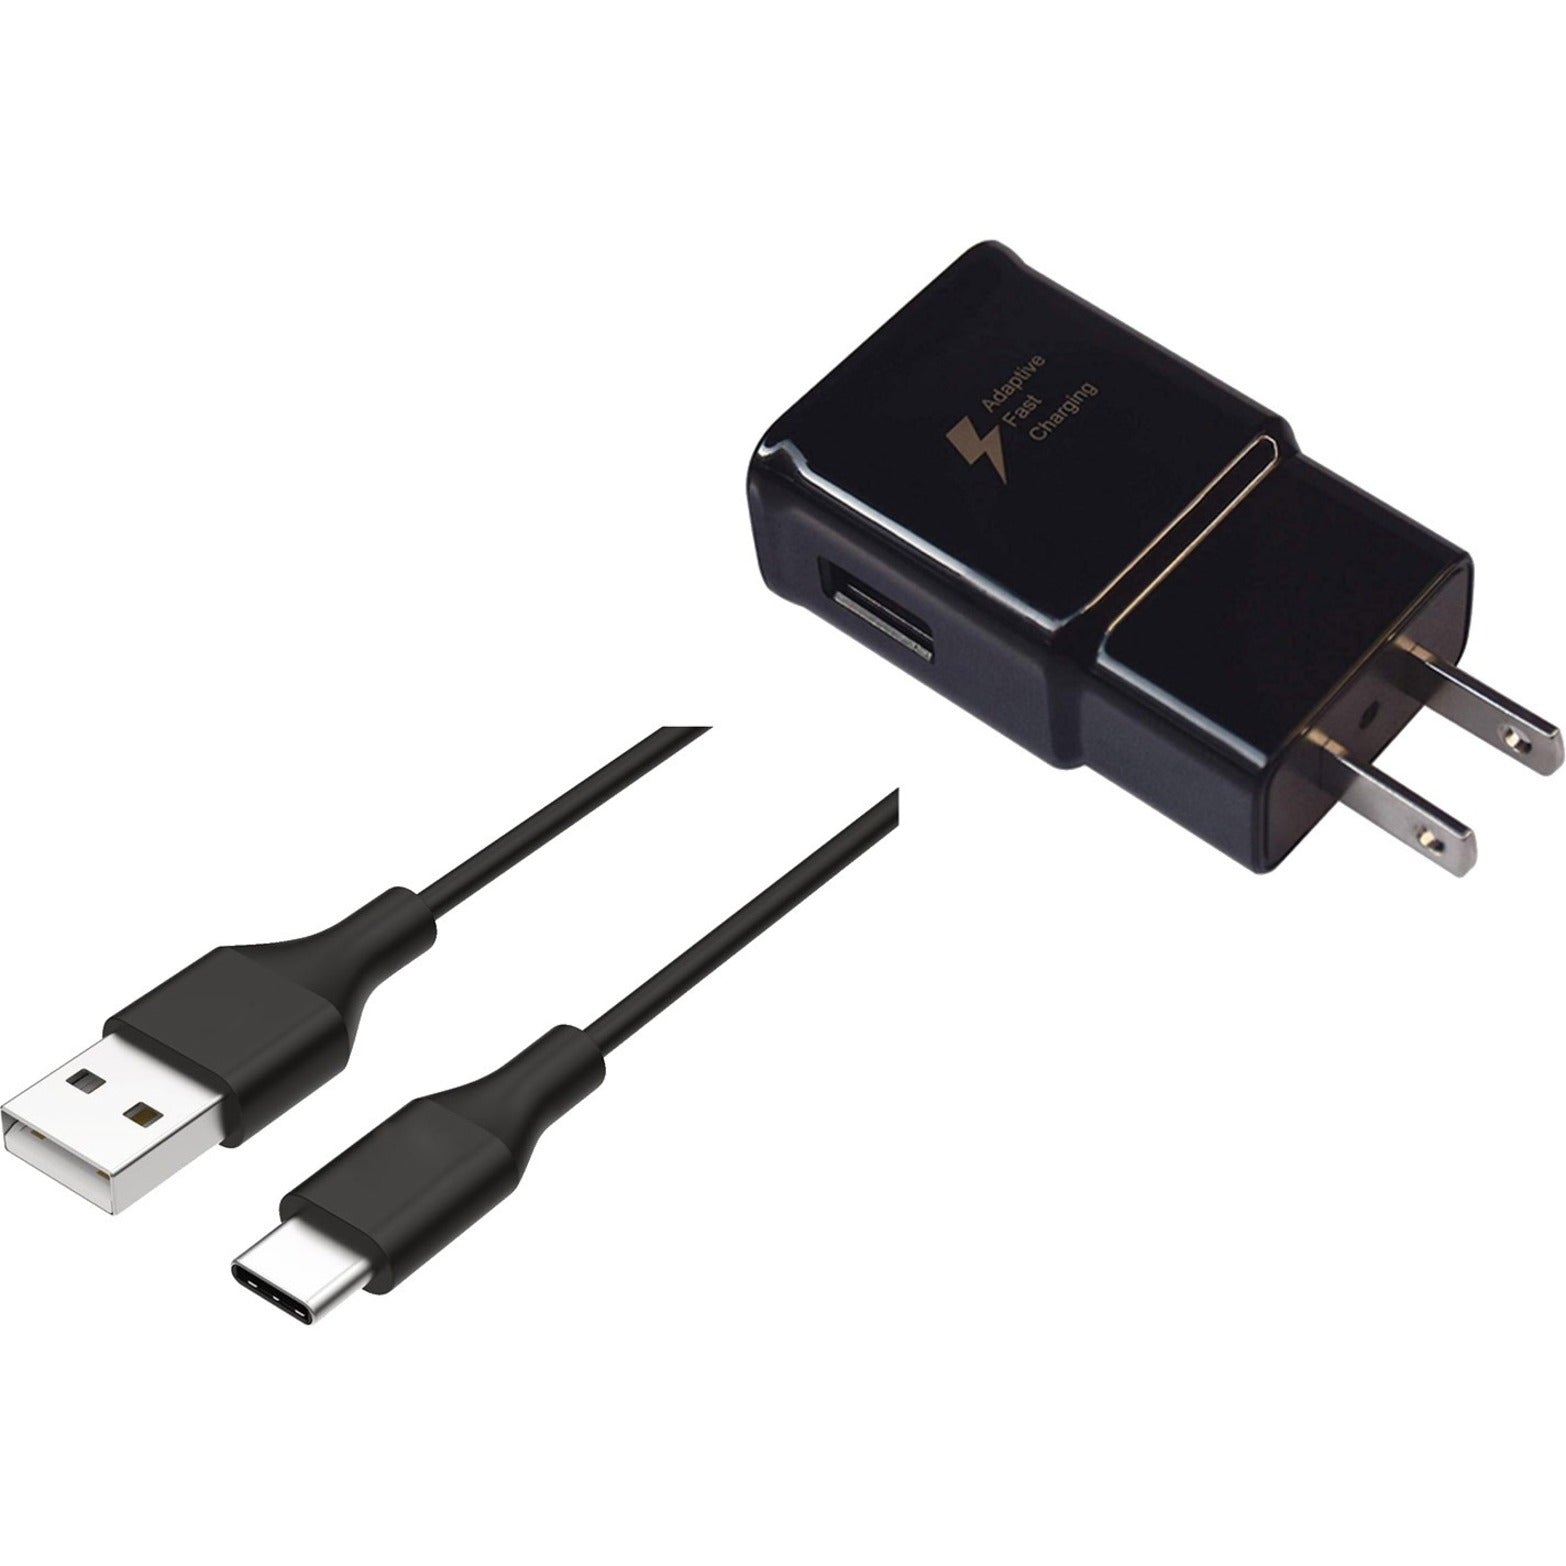 4XEM 4XSAMKITUSBCB3 Samsung USB-C 3FT Charger Kit (Black), 3ft Cable, 1 Year Warranty